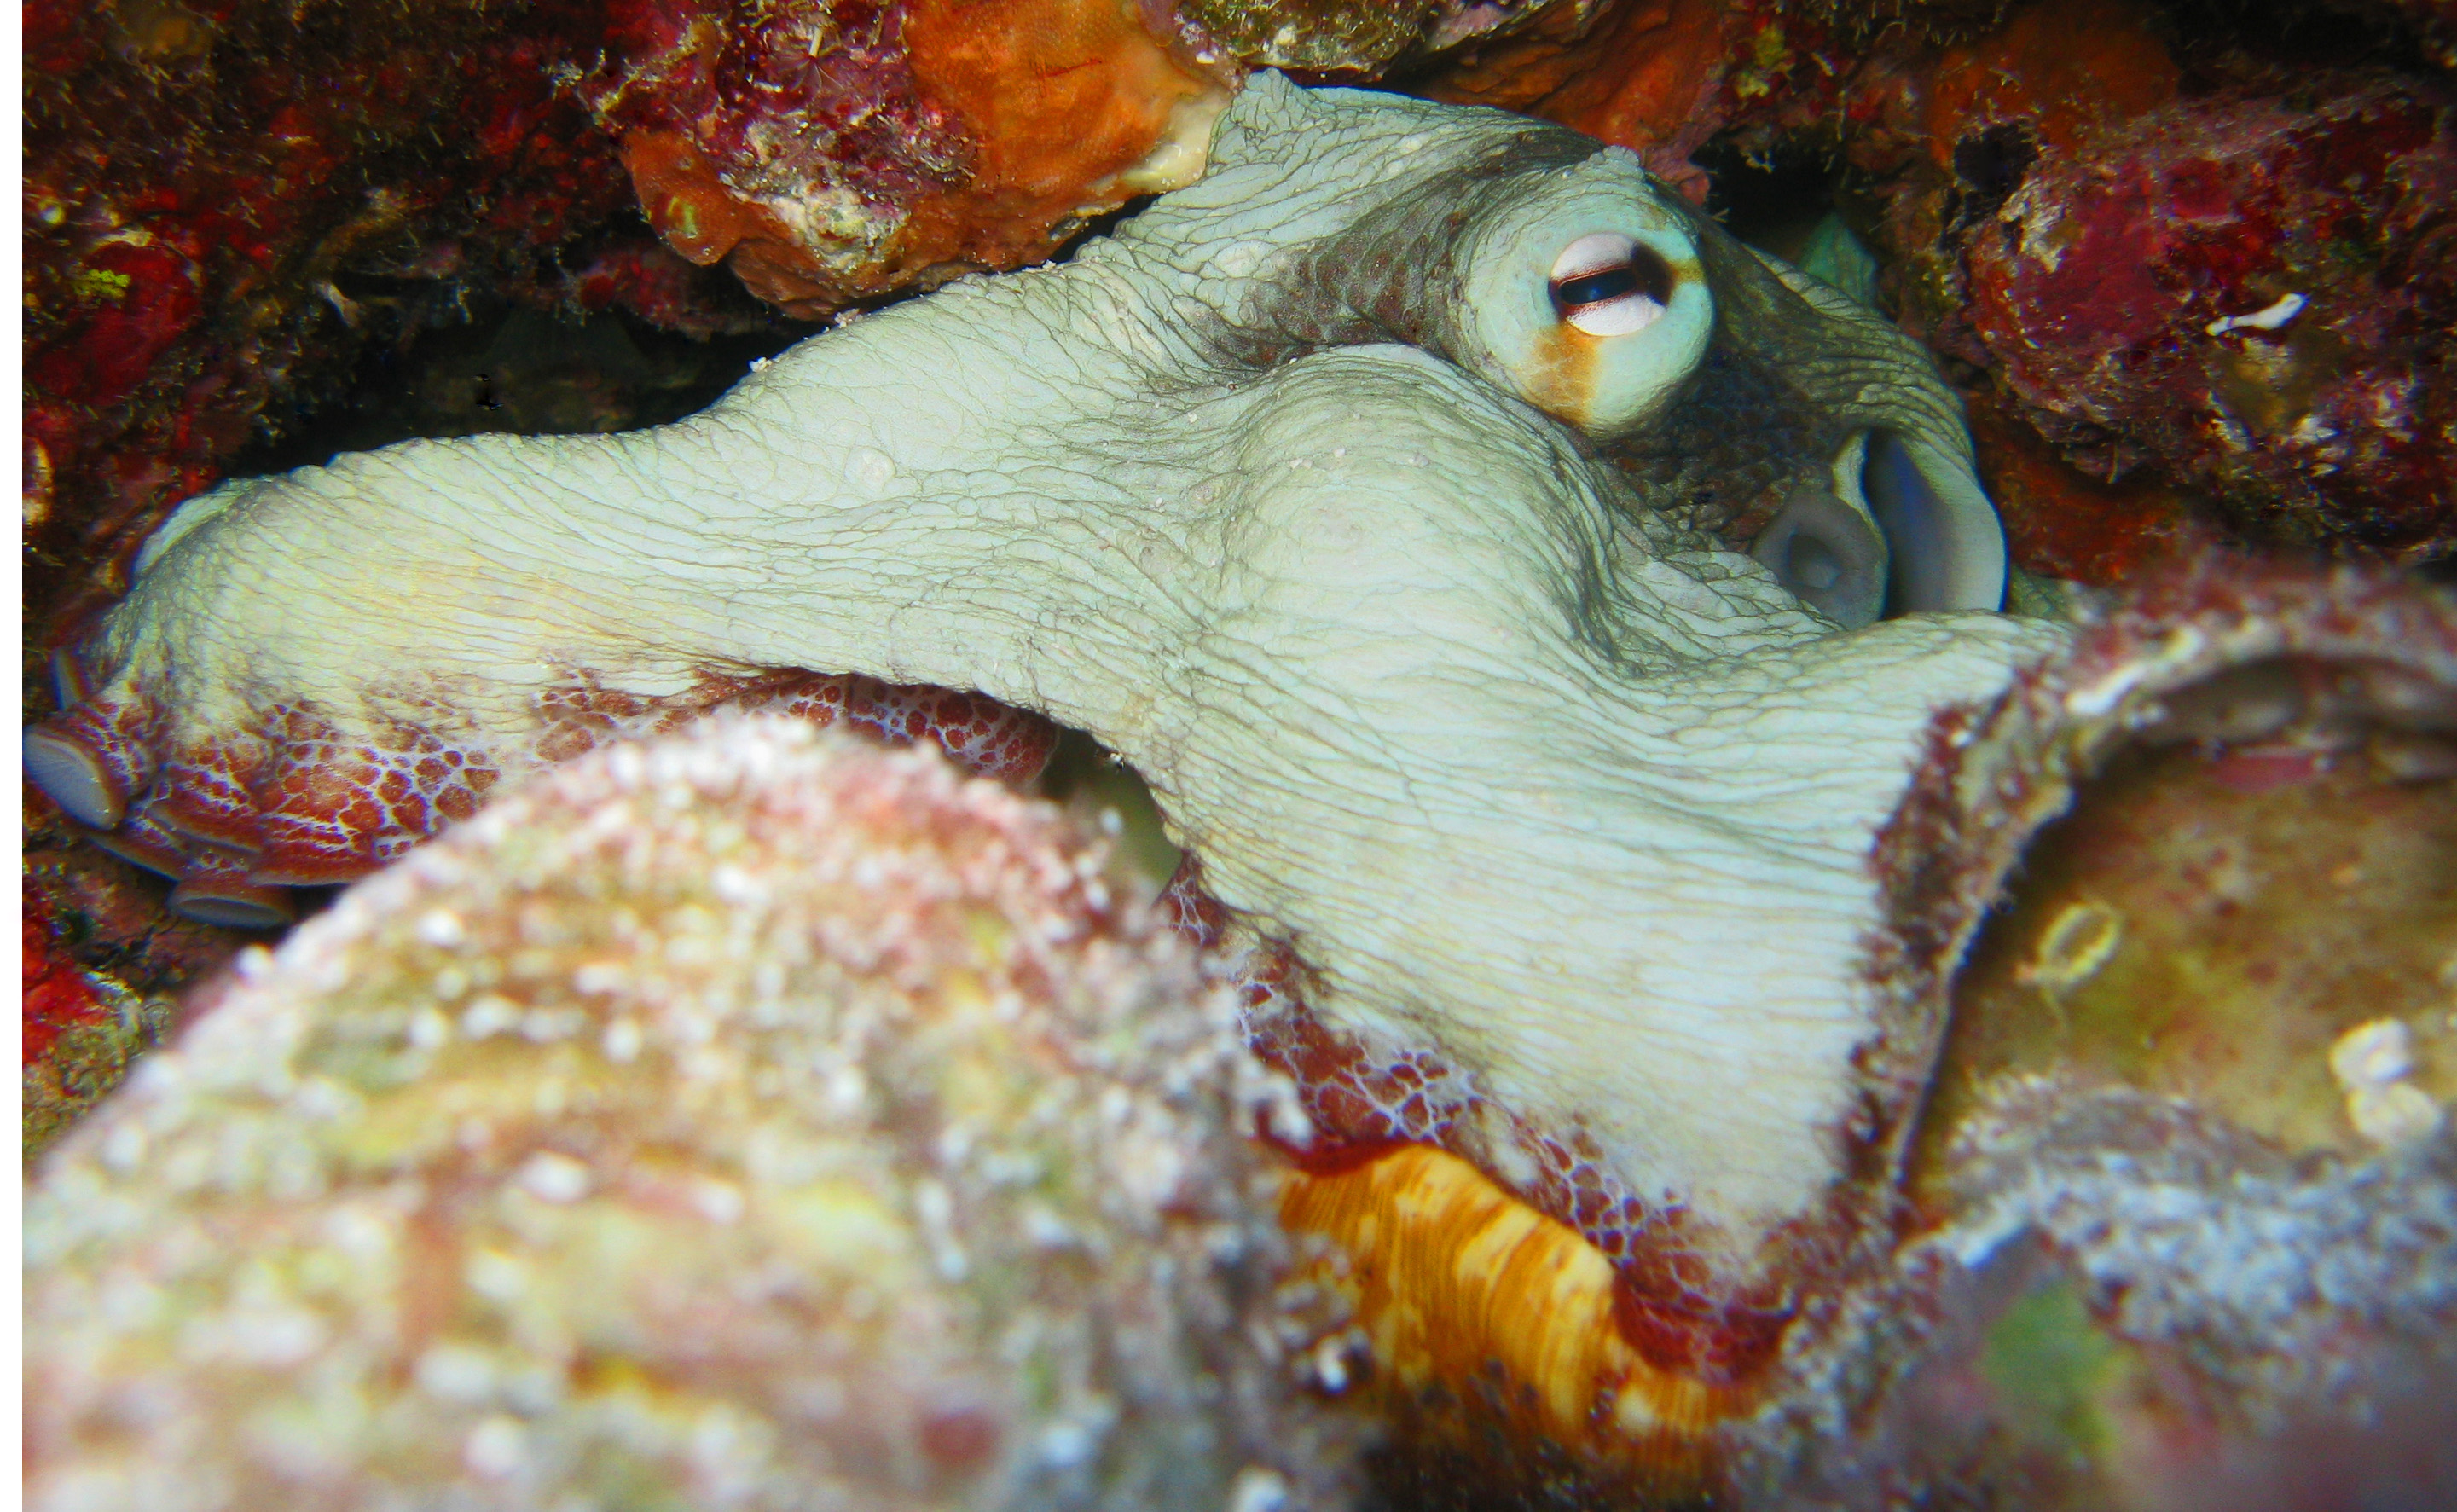 Cozumel octopus